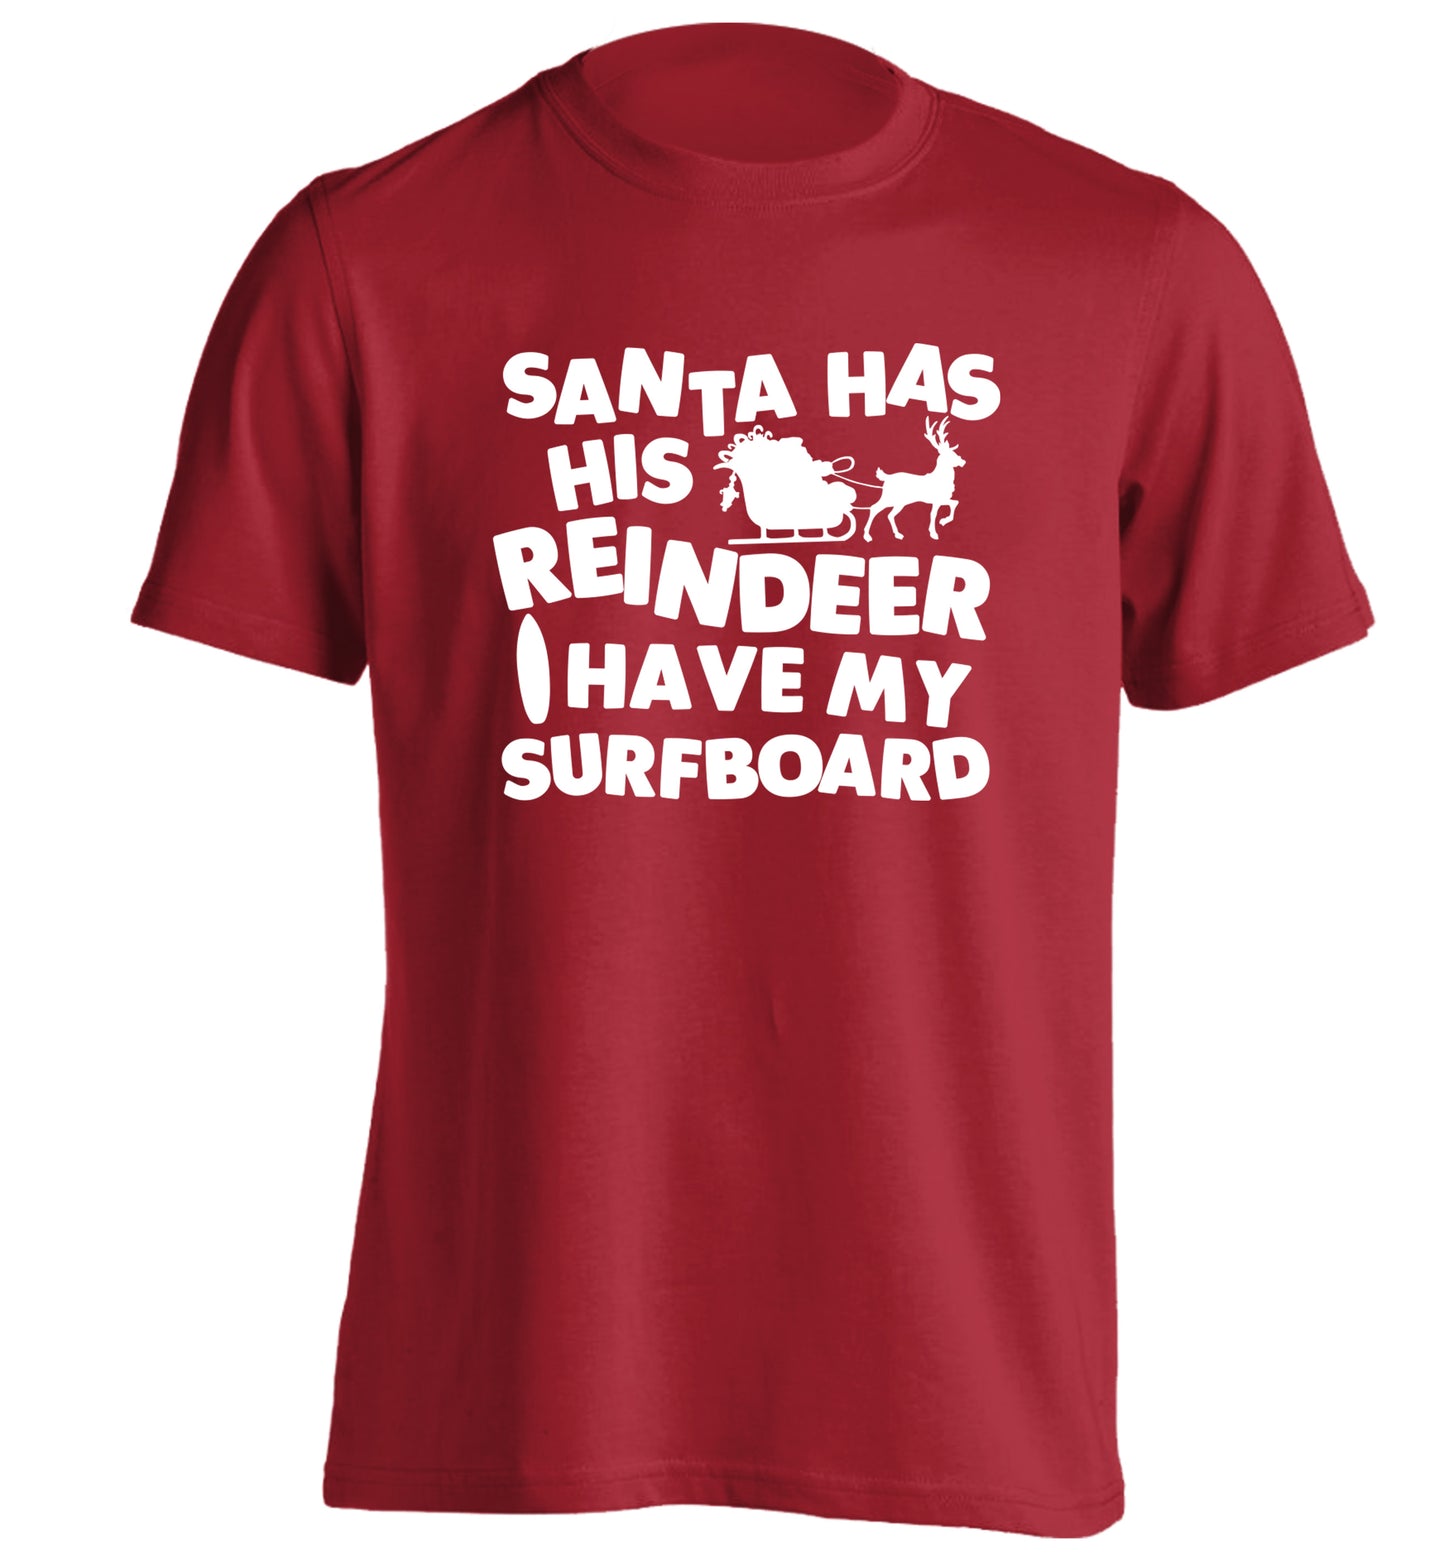 Santa has his reindeer I have my surfboard adults unisex red Tshirt 2XL